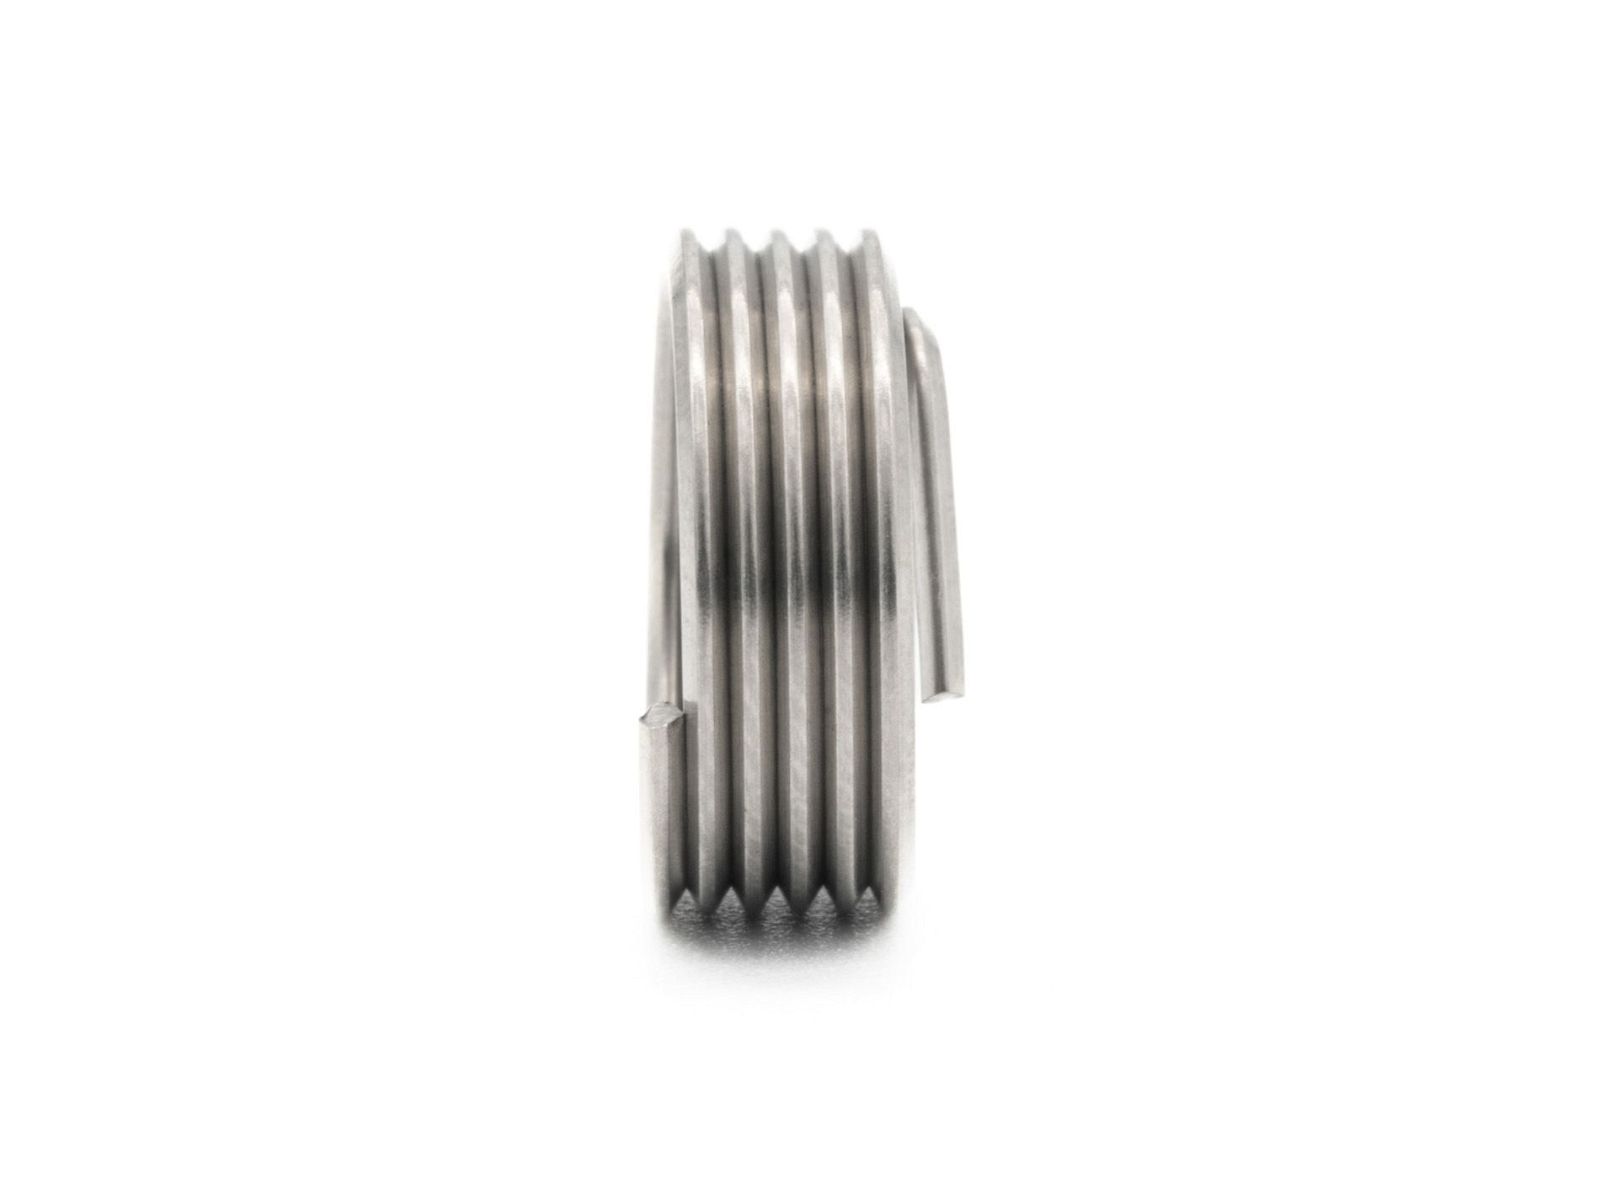 BaerCoil Wire Thread Inserts G (BSP) 3/4 x 14 - 1.5 D (28.58 mm) - free running - 5 pcs.